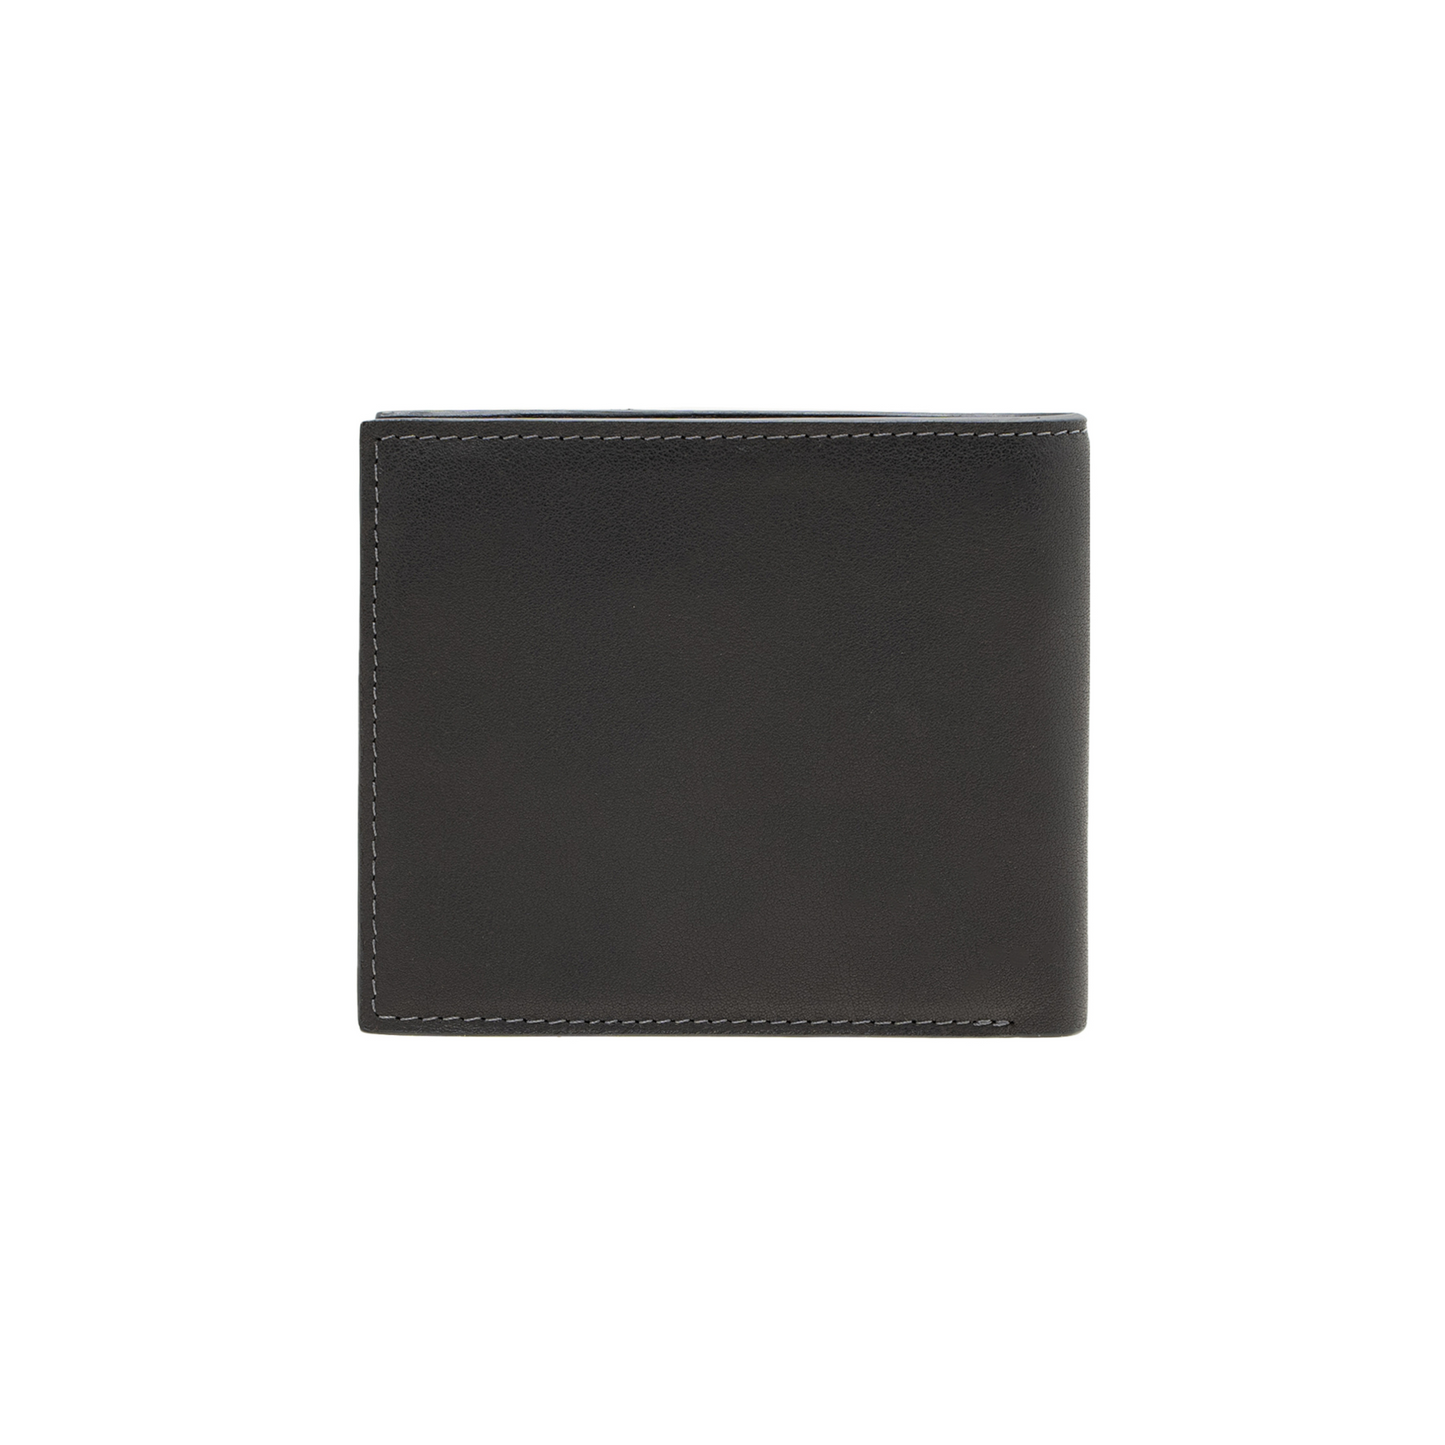 MOSSIMO Men's Wallet